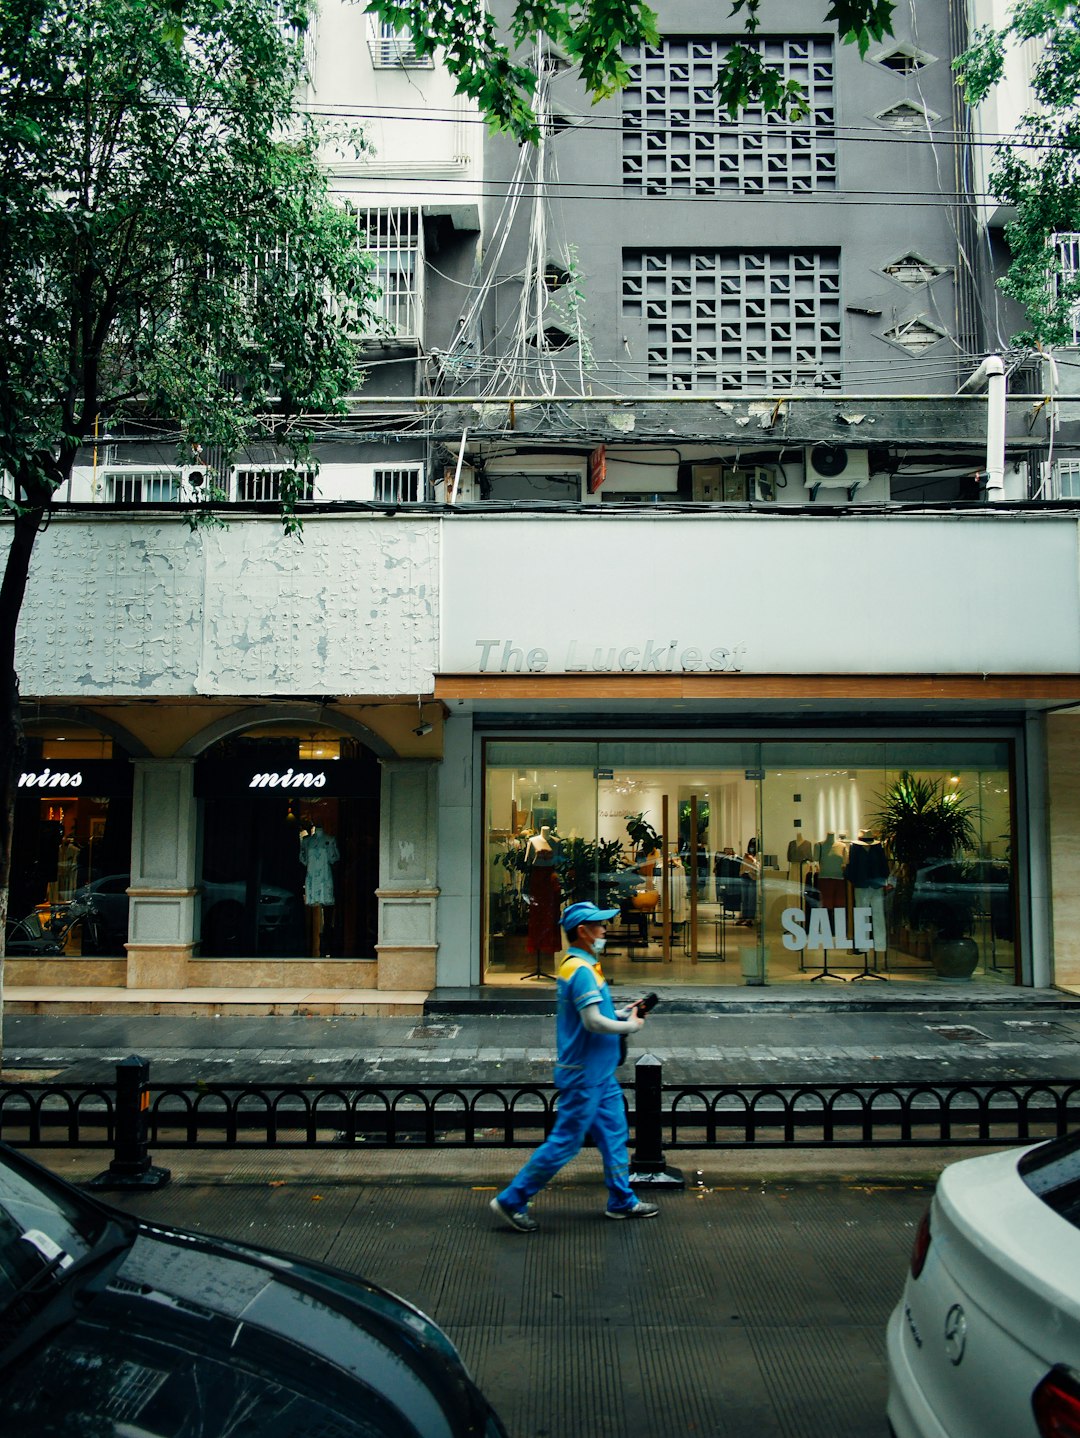 man in blue jacket walking on sidewalk near building during daytime